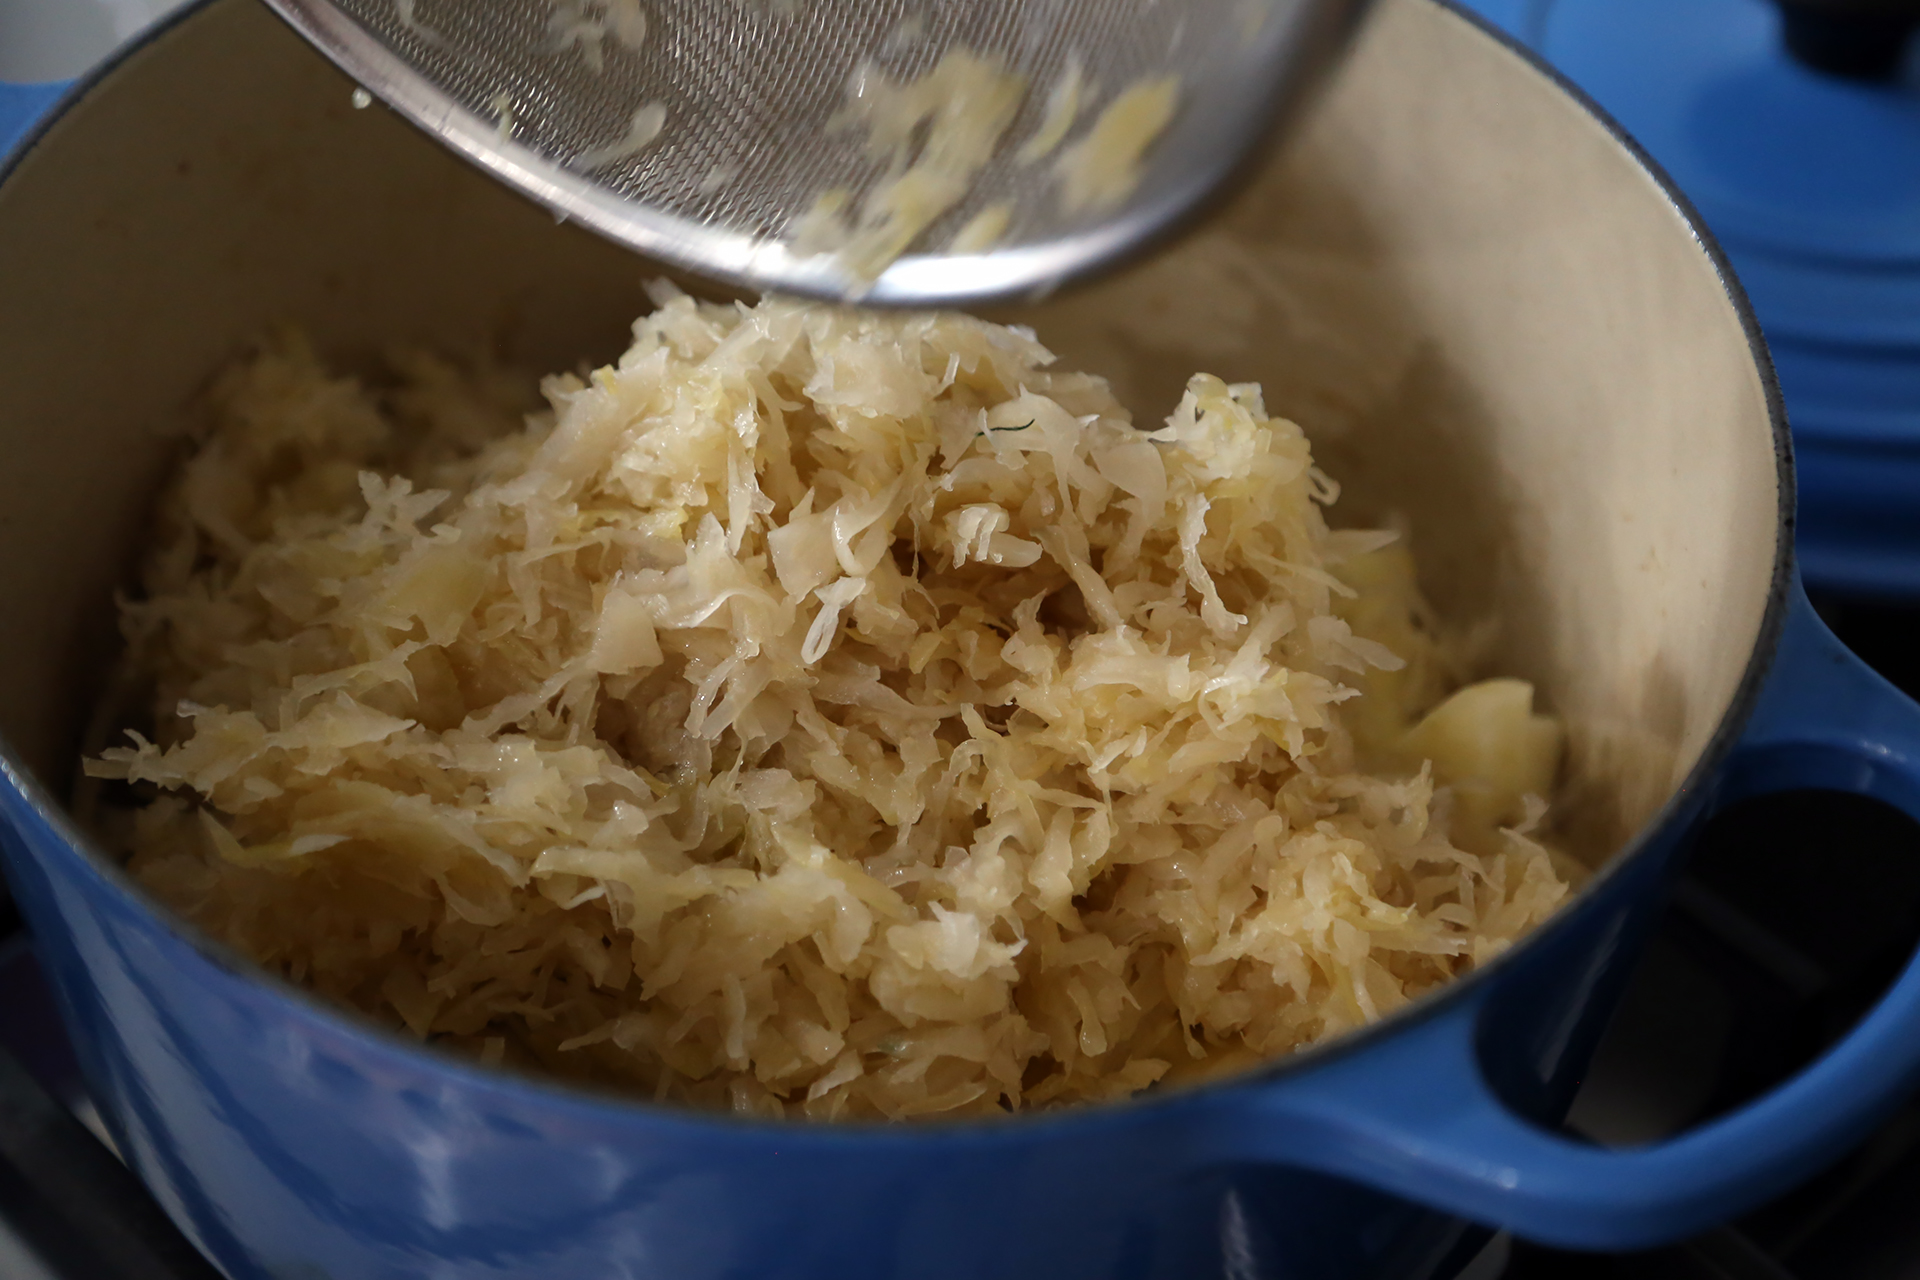 Add the sauerkraut and stir to mix.